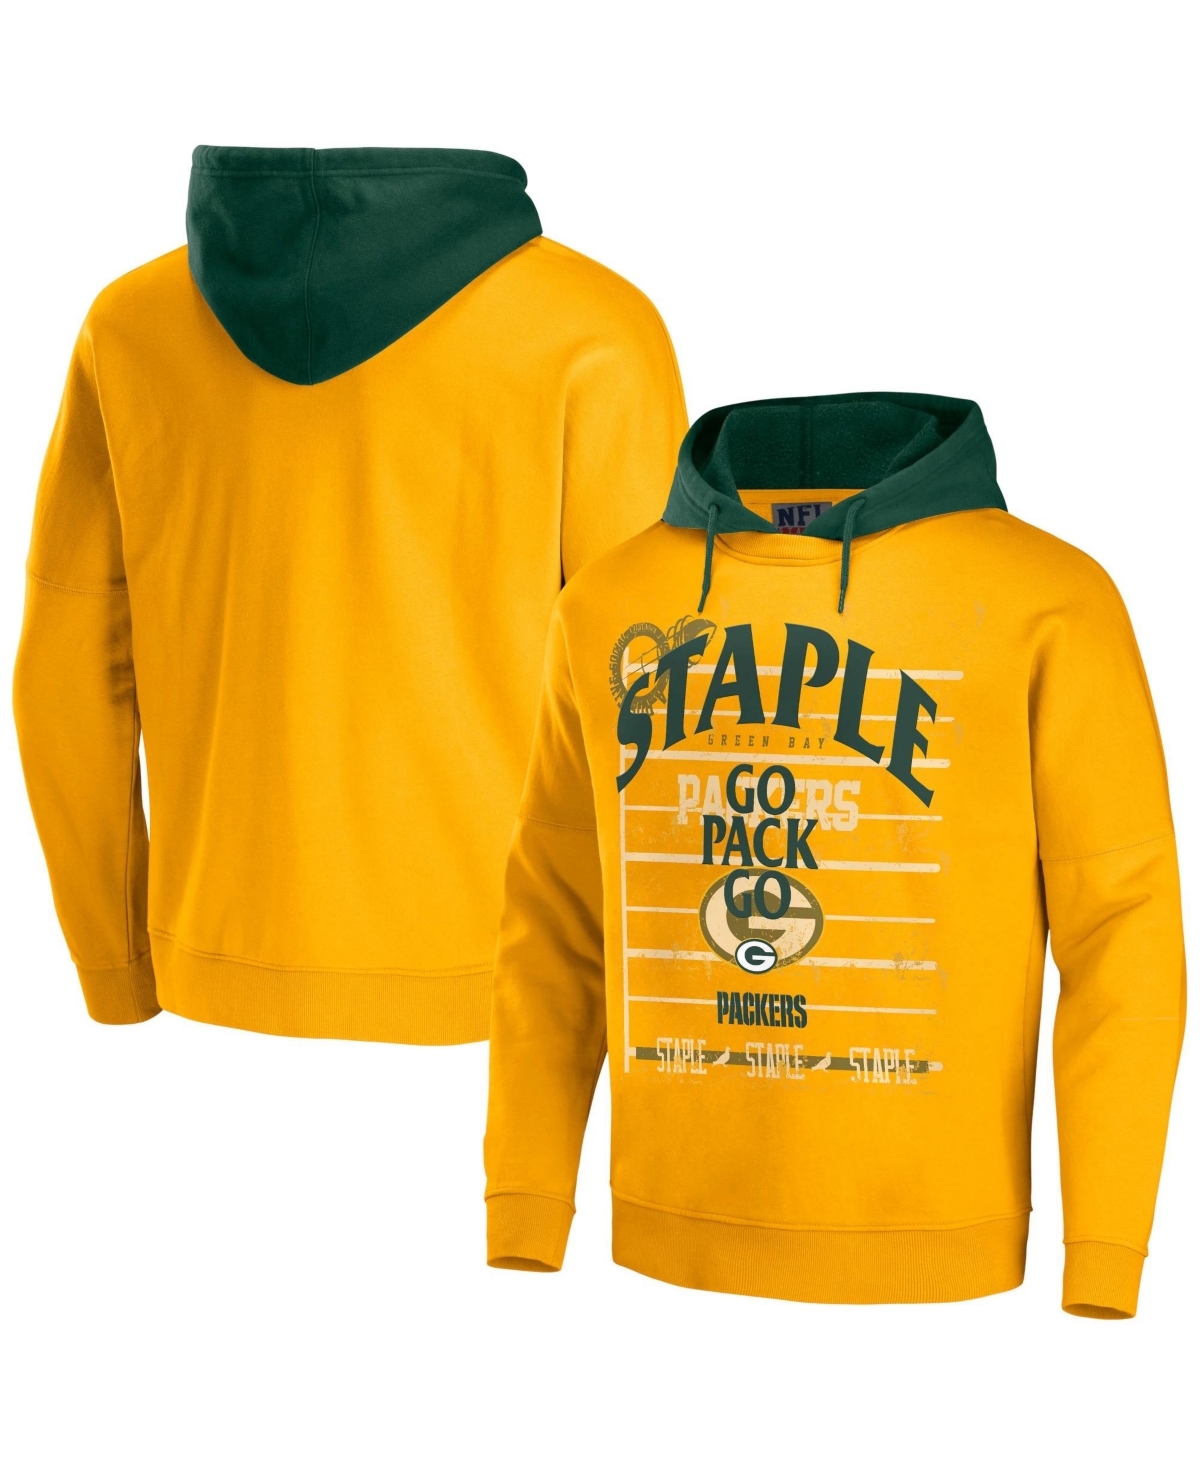 Nfl Properties Men's Nfl X Staple Yellow Green Bay Packers Oversized Gridiron Vintage-like Wash Pullover Hoodie